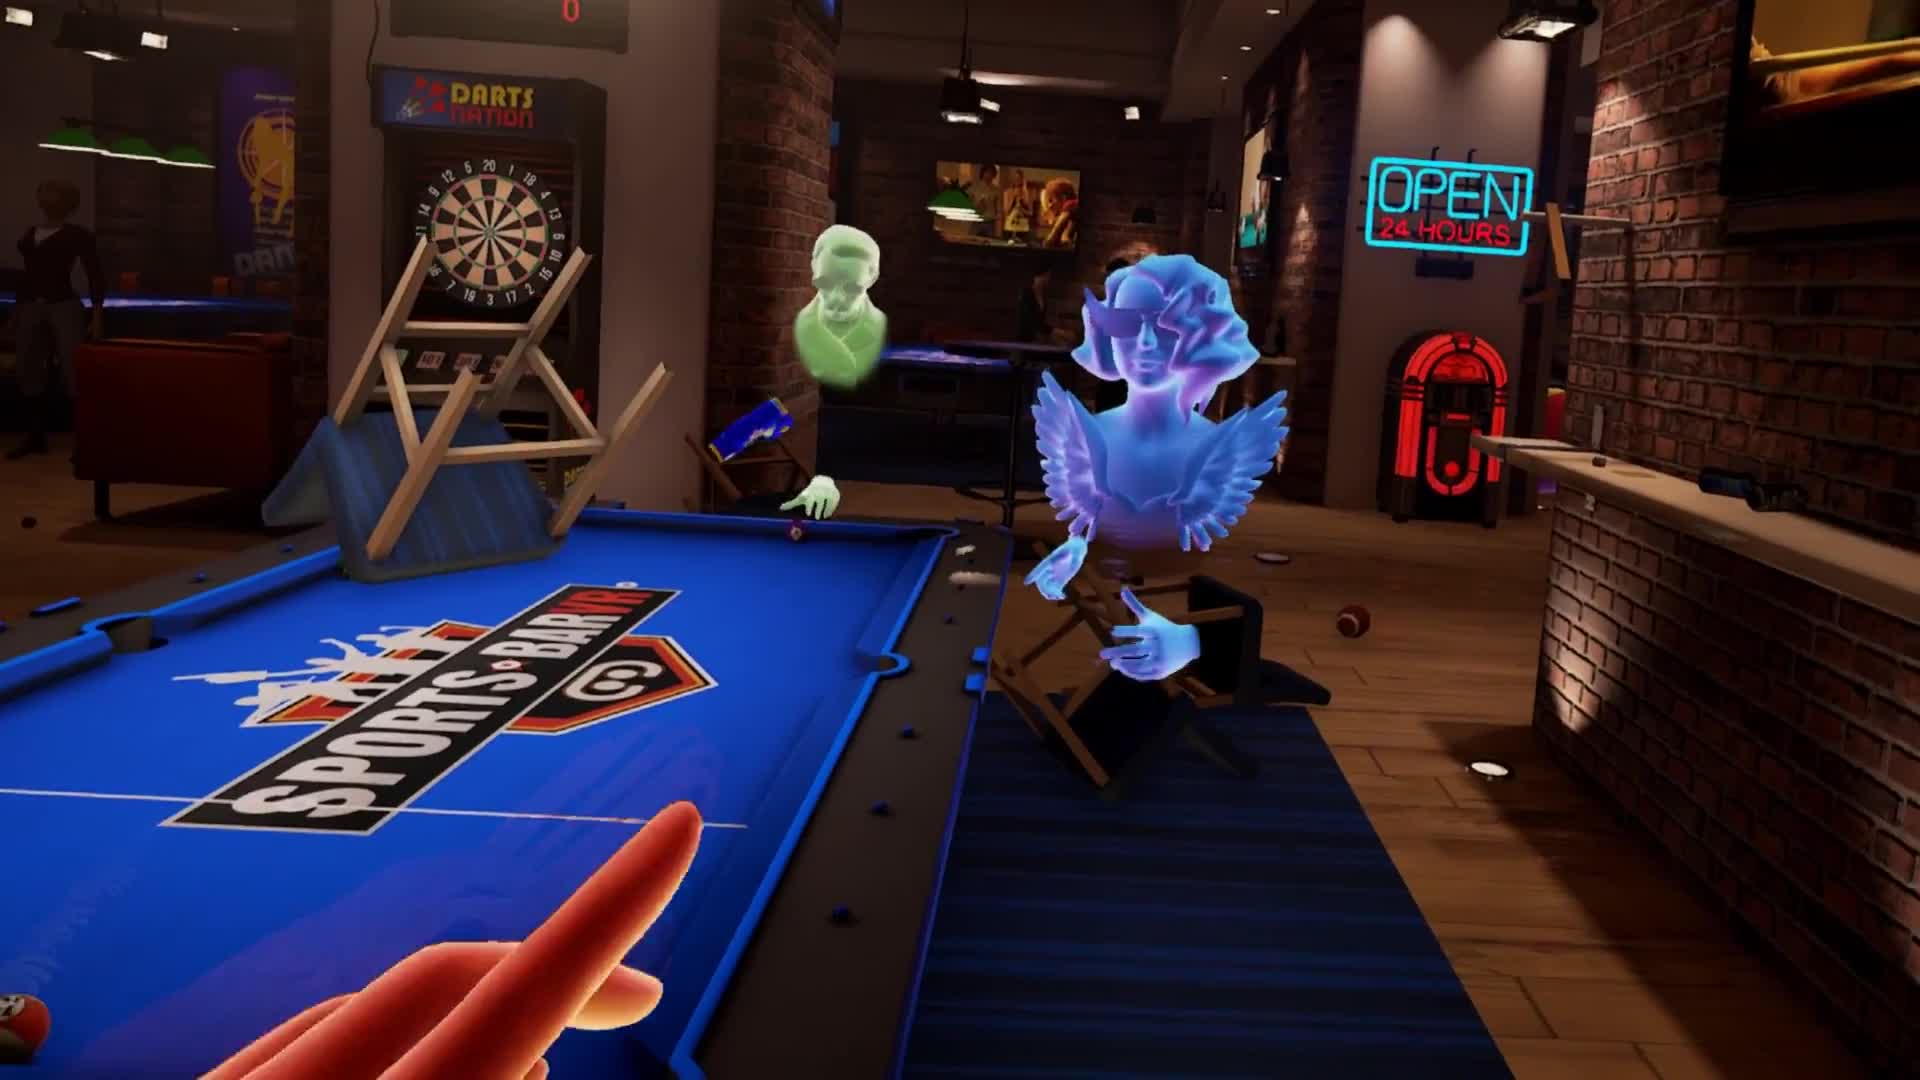 Sports Bar VR - Oculus Touch & Avatars